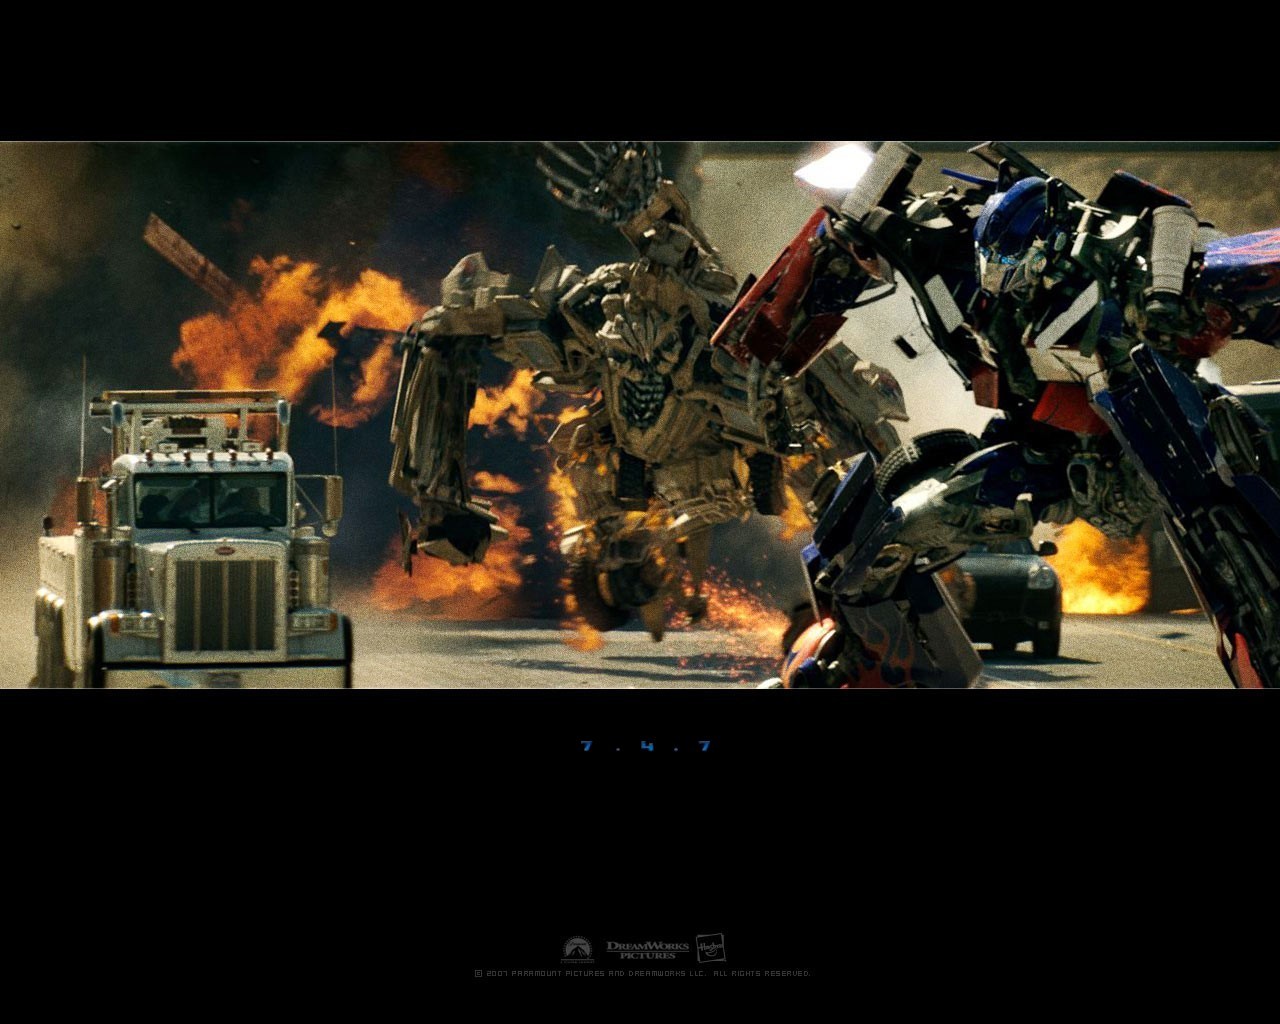 "Transformers Movie" desktop wallpaper (1280 x 1024 pixels)